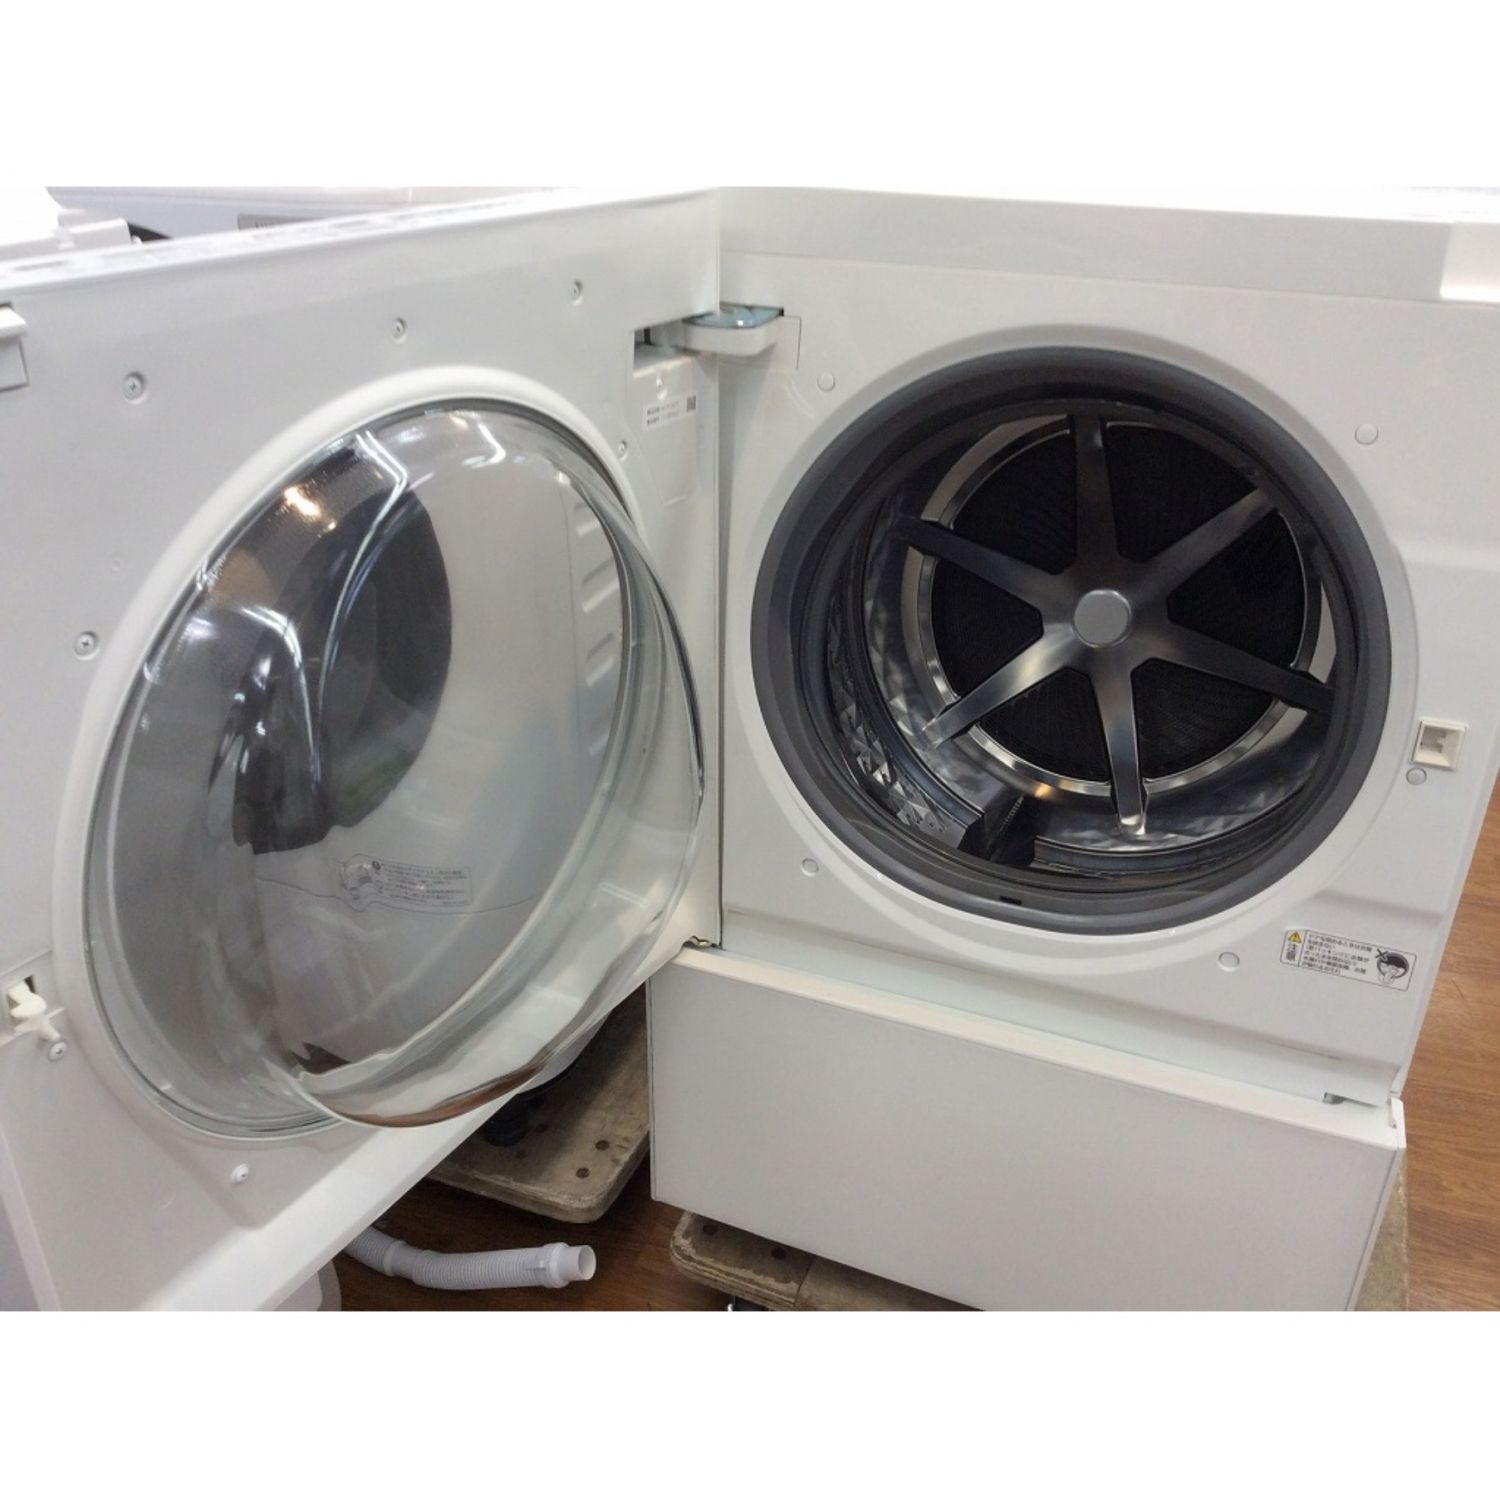 Panasonic (パナソニック) ドラム式洗濯乾燥機 7.0kg NA-VG720L 2017年